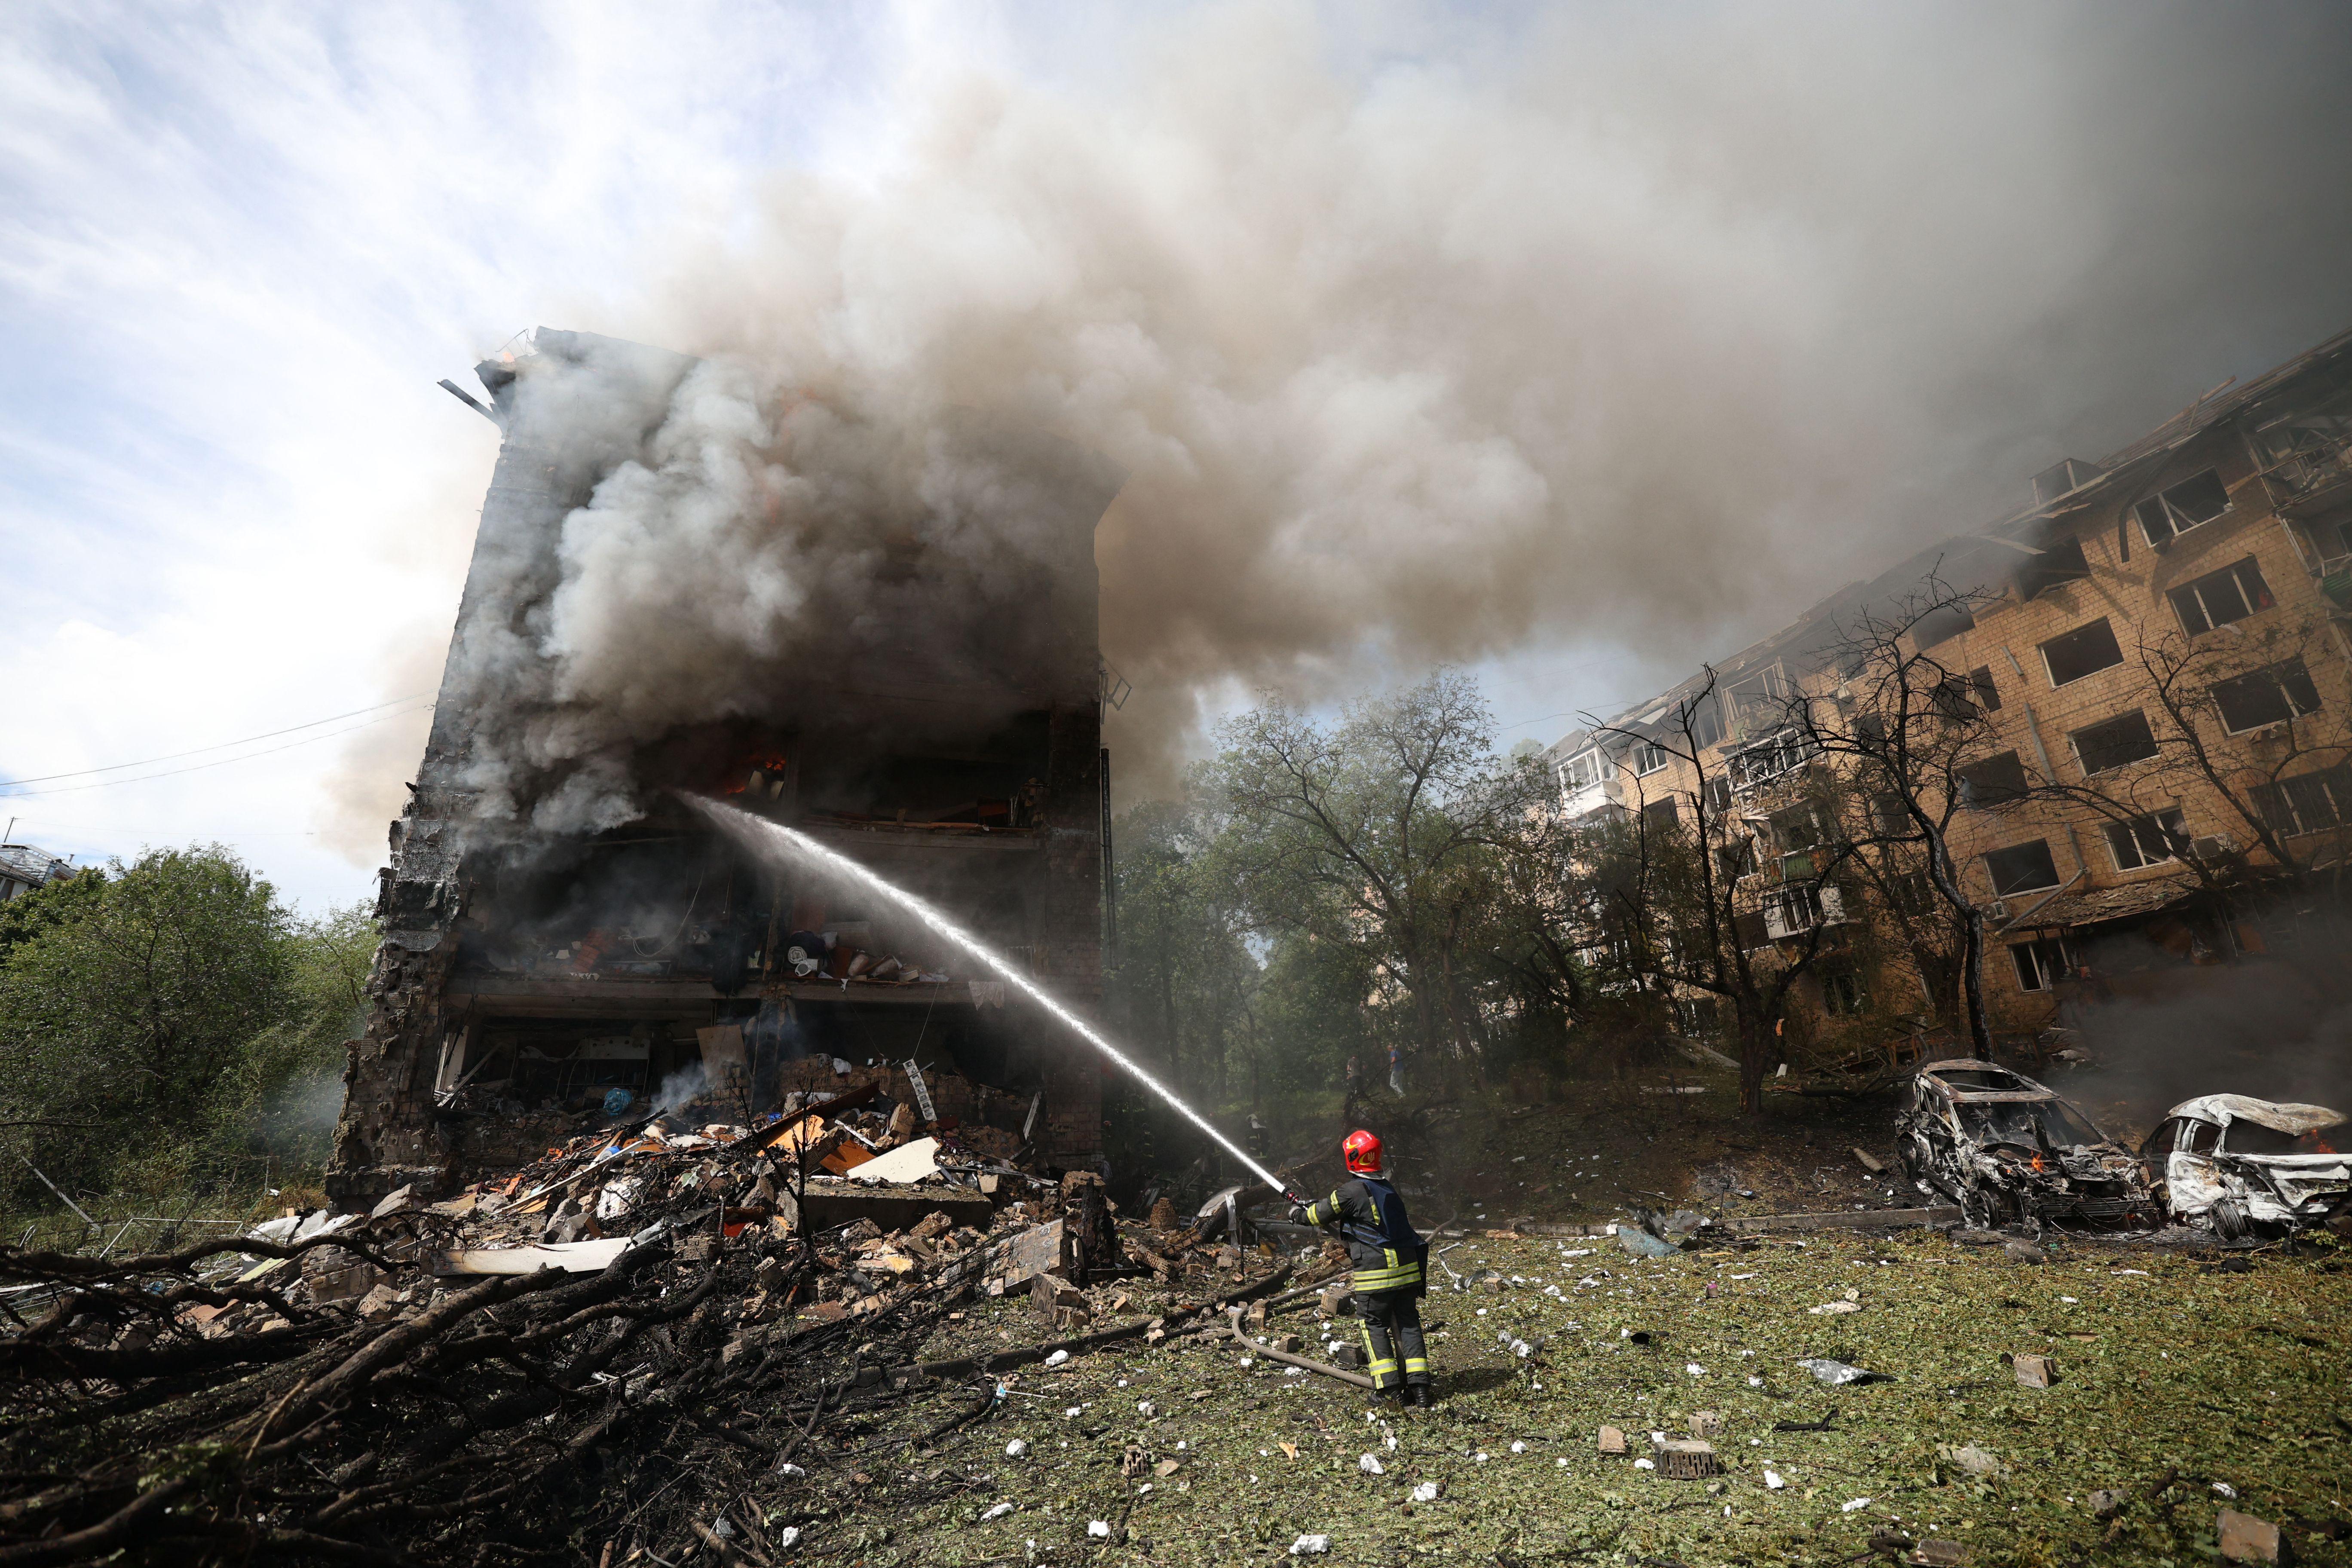 Ucraina - droni russi verso Kiev: esplosioni nella capitale - Zelensky oggi in Uk